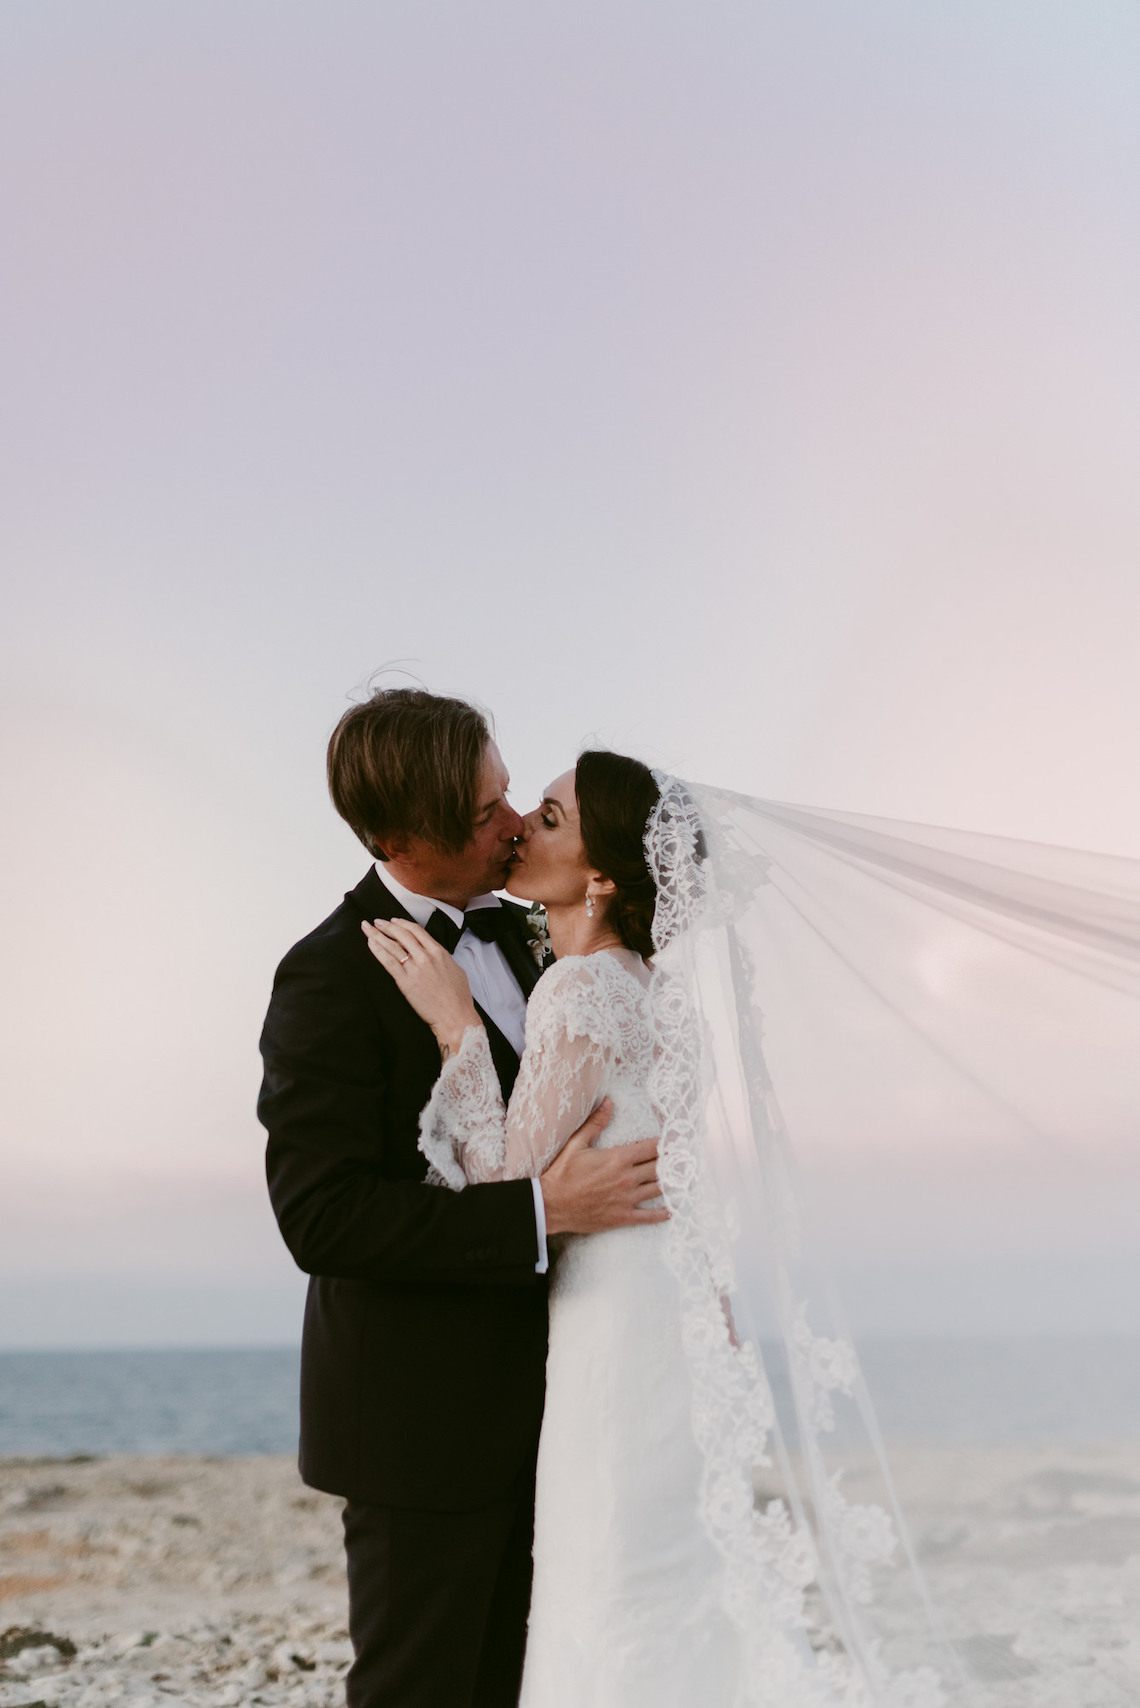 Luxurious Italian Cathedral Wedding On The Seaside | Serena Cevenini 42